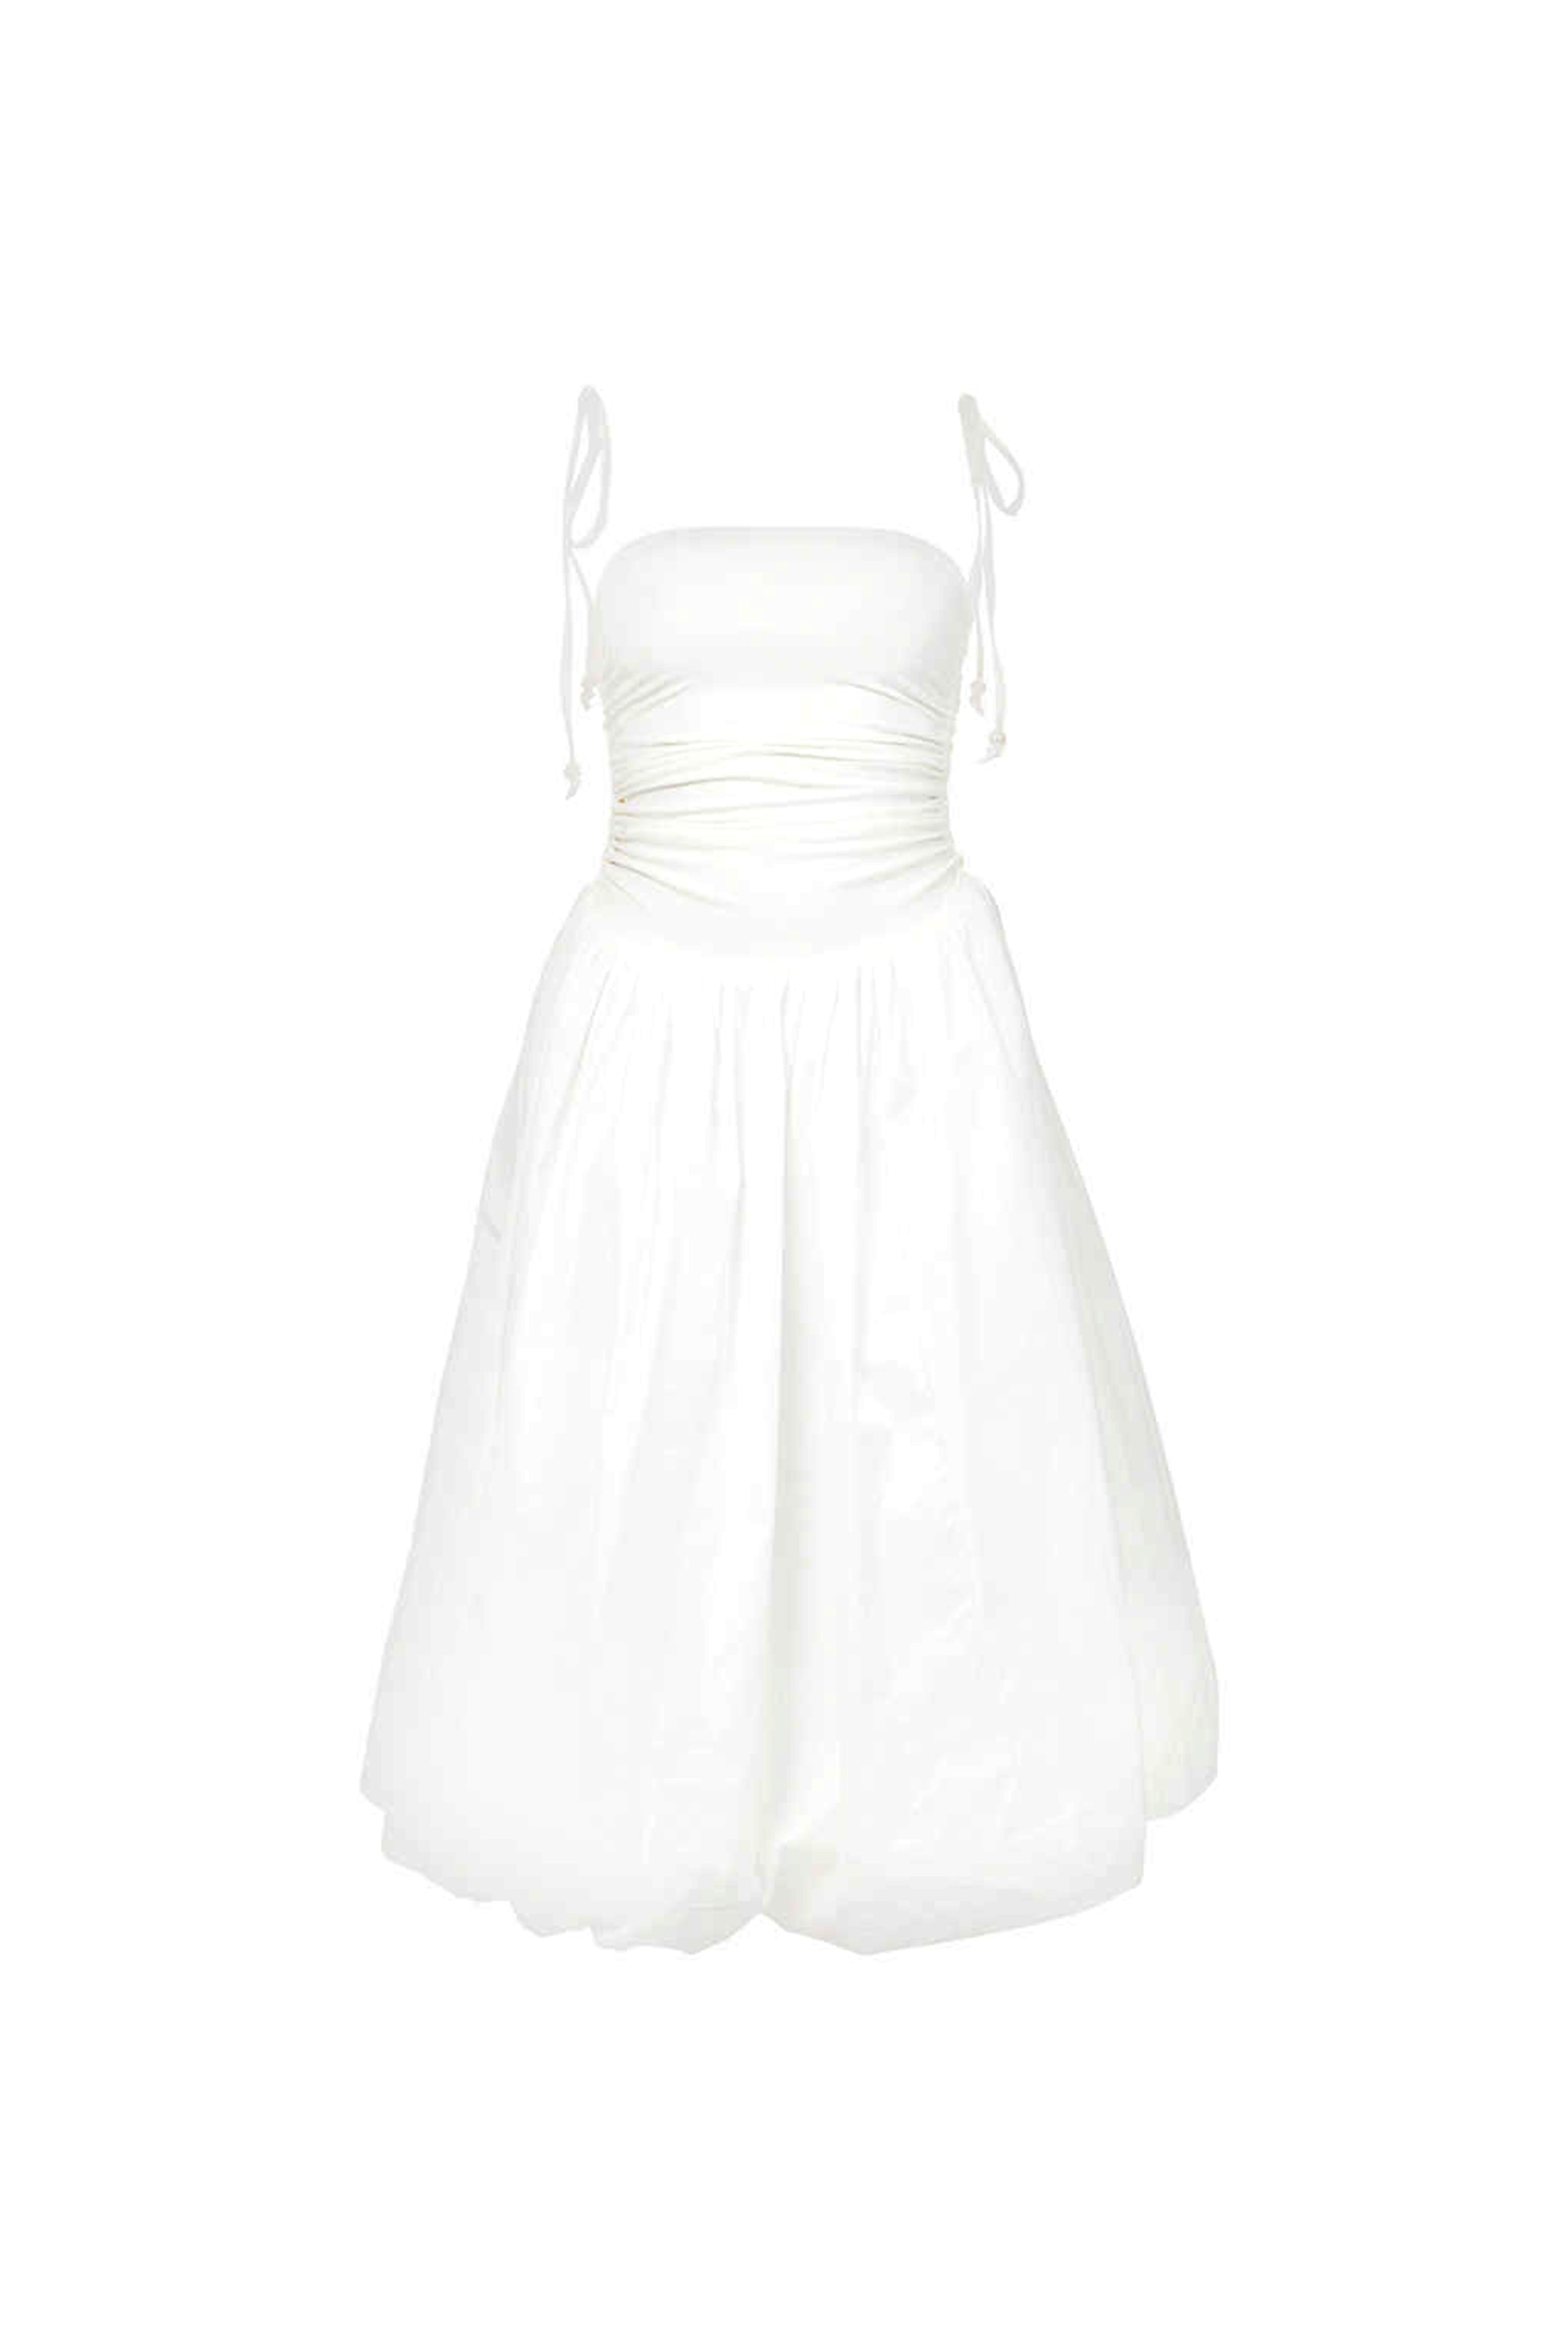 Alexa White Puffball Dress